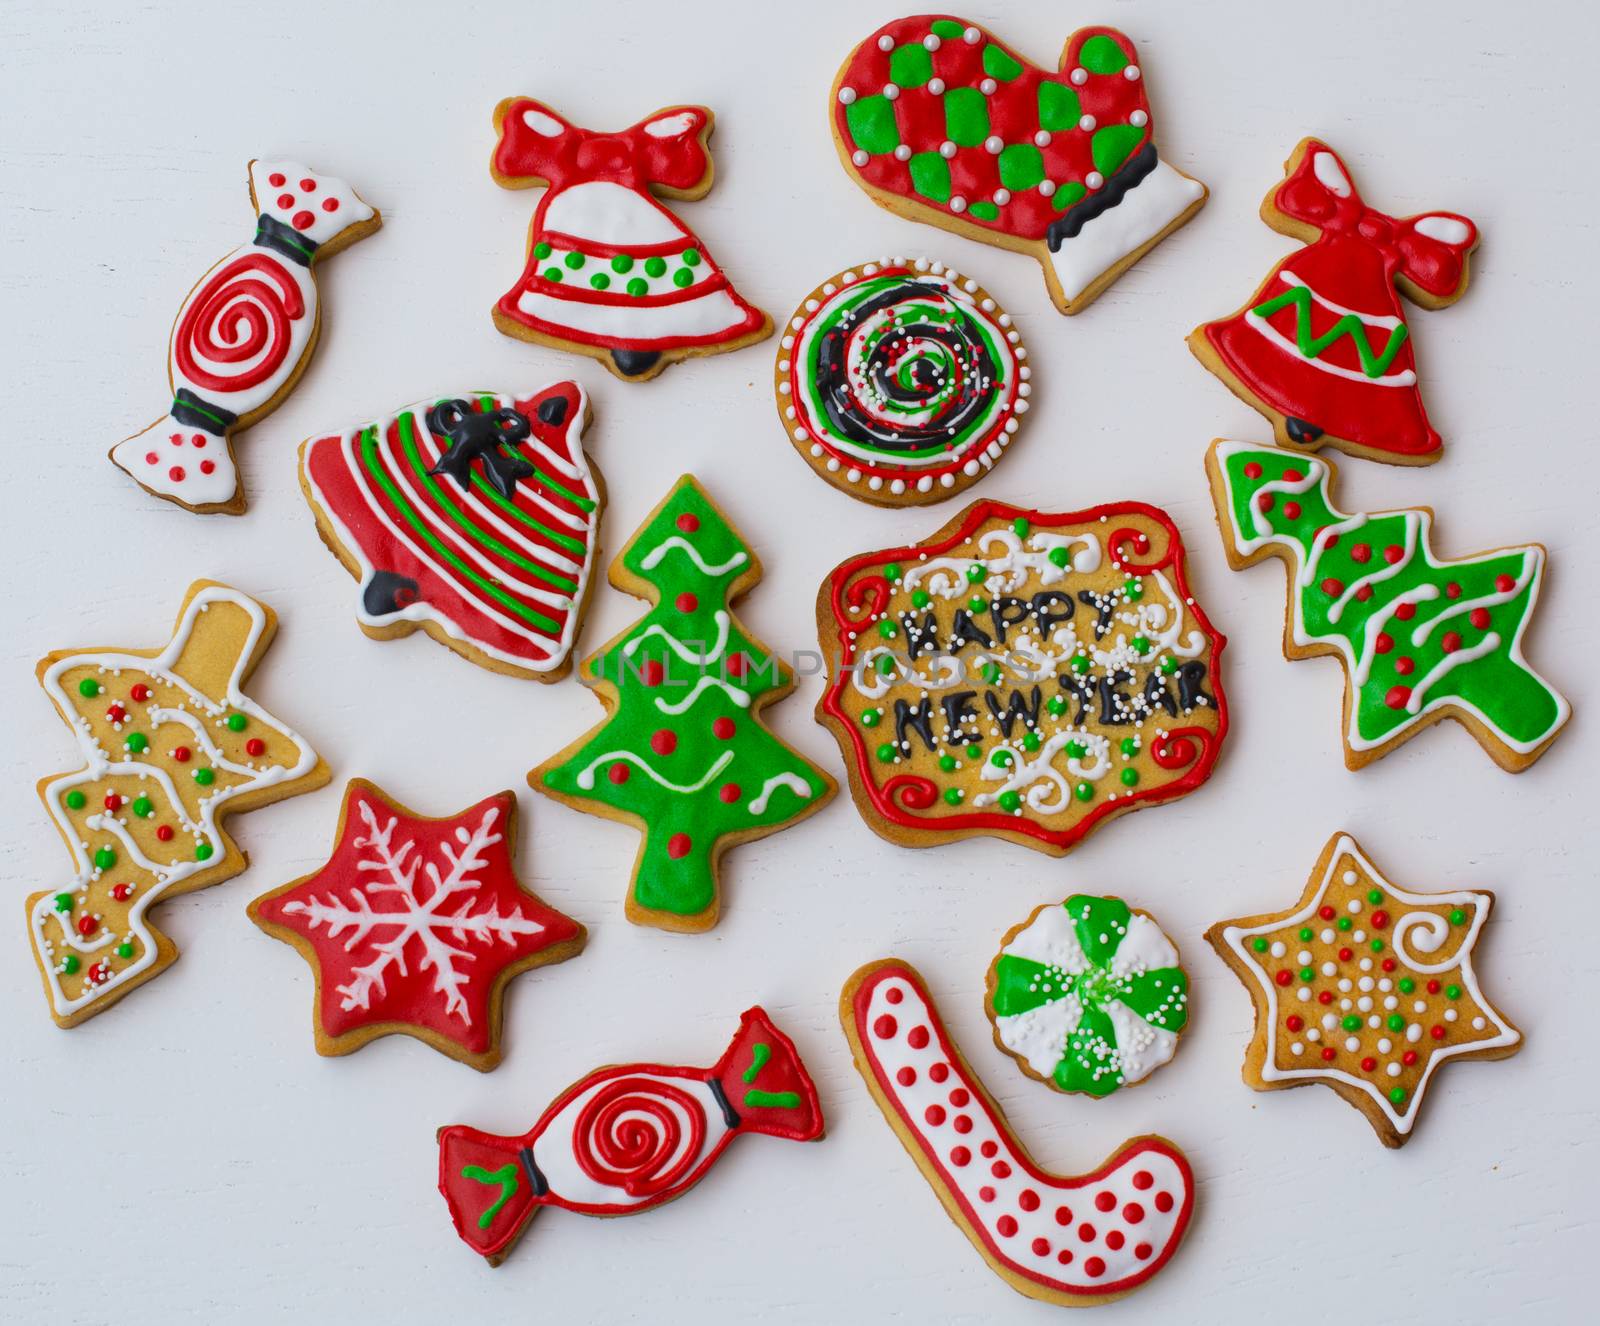 shaped, colorful Christmas cookies by yebeka